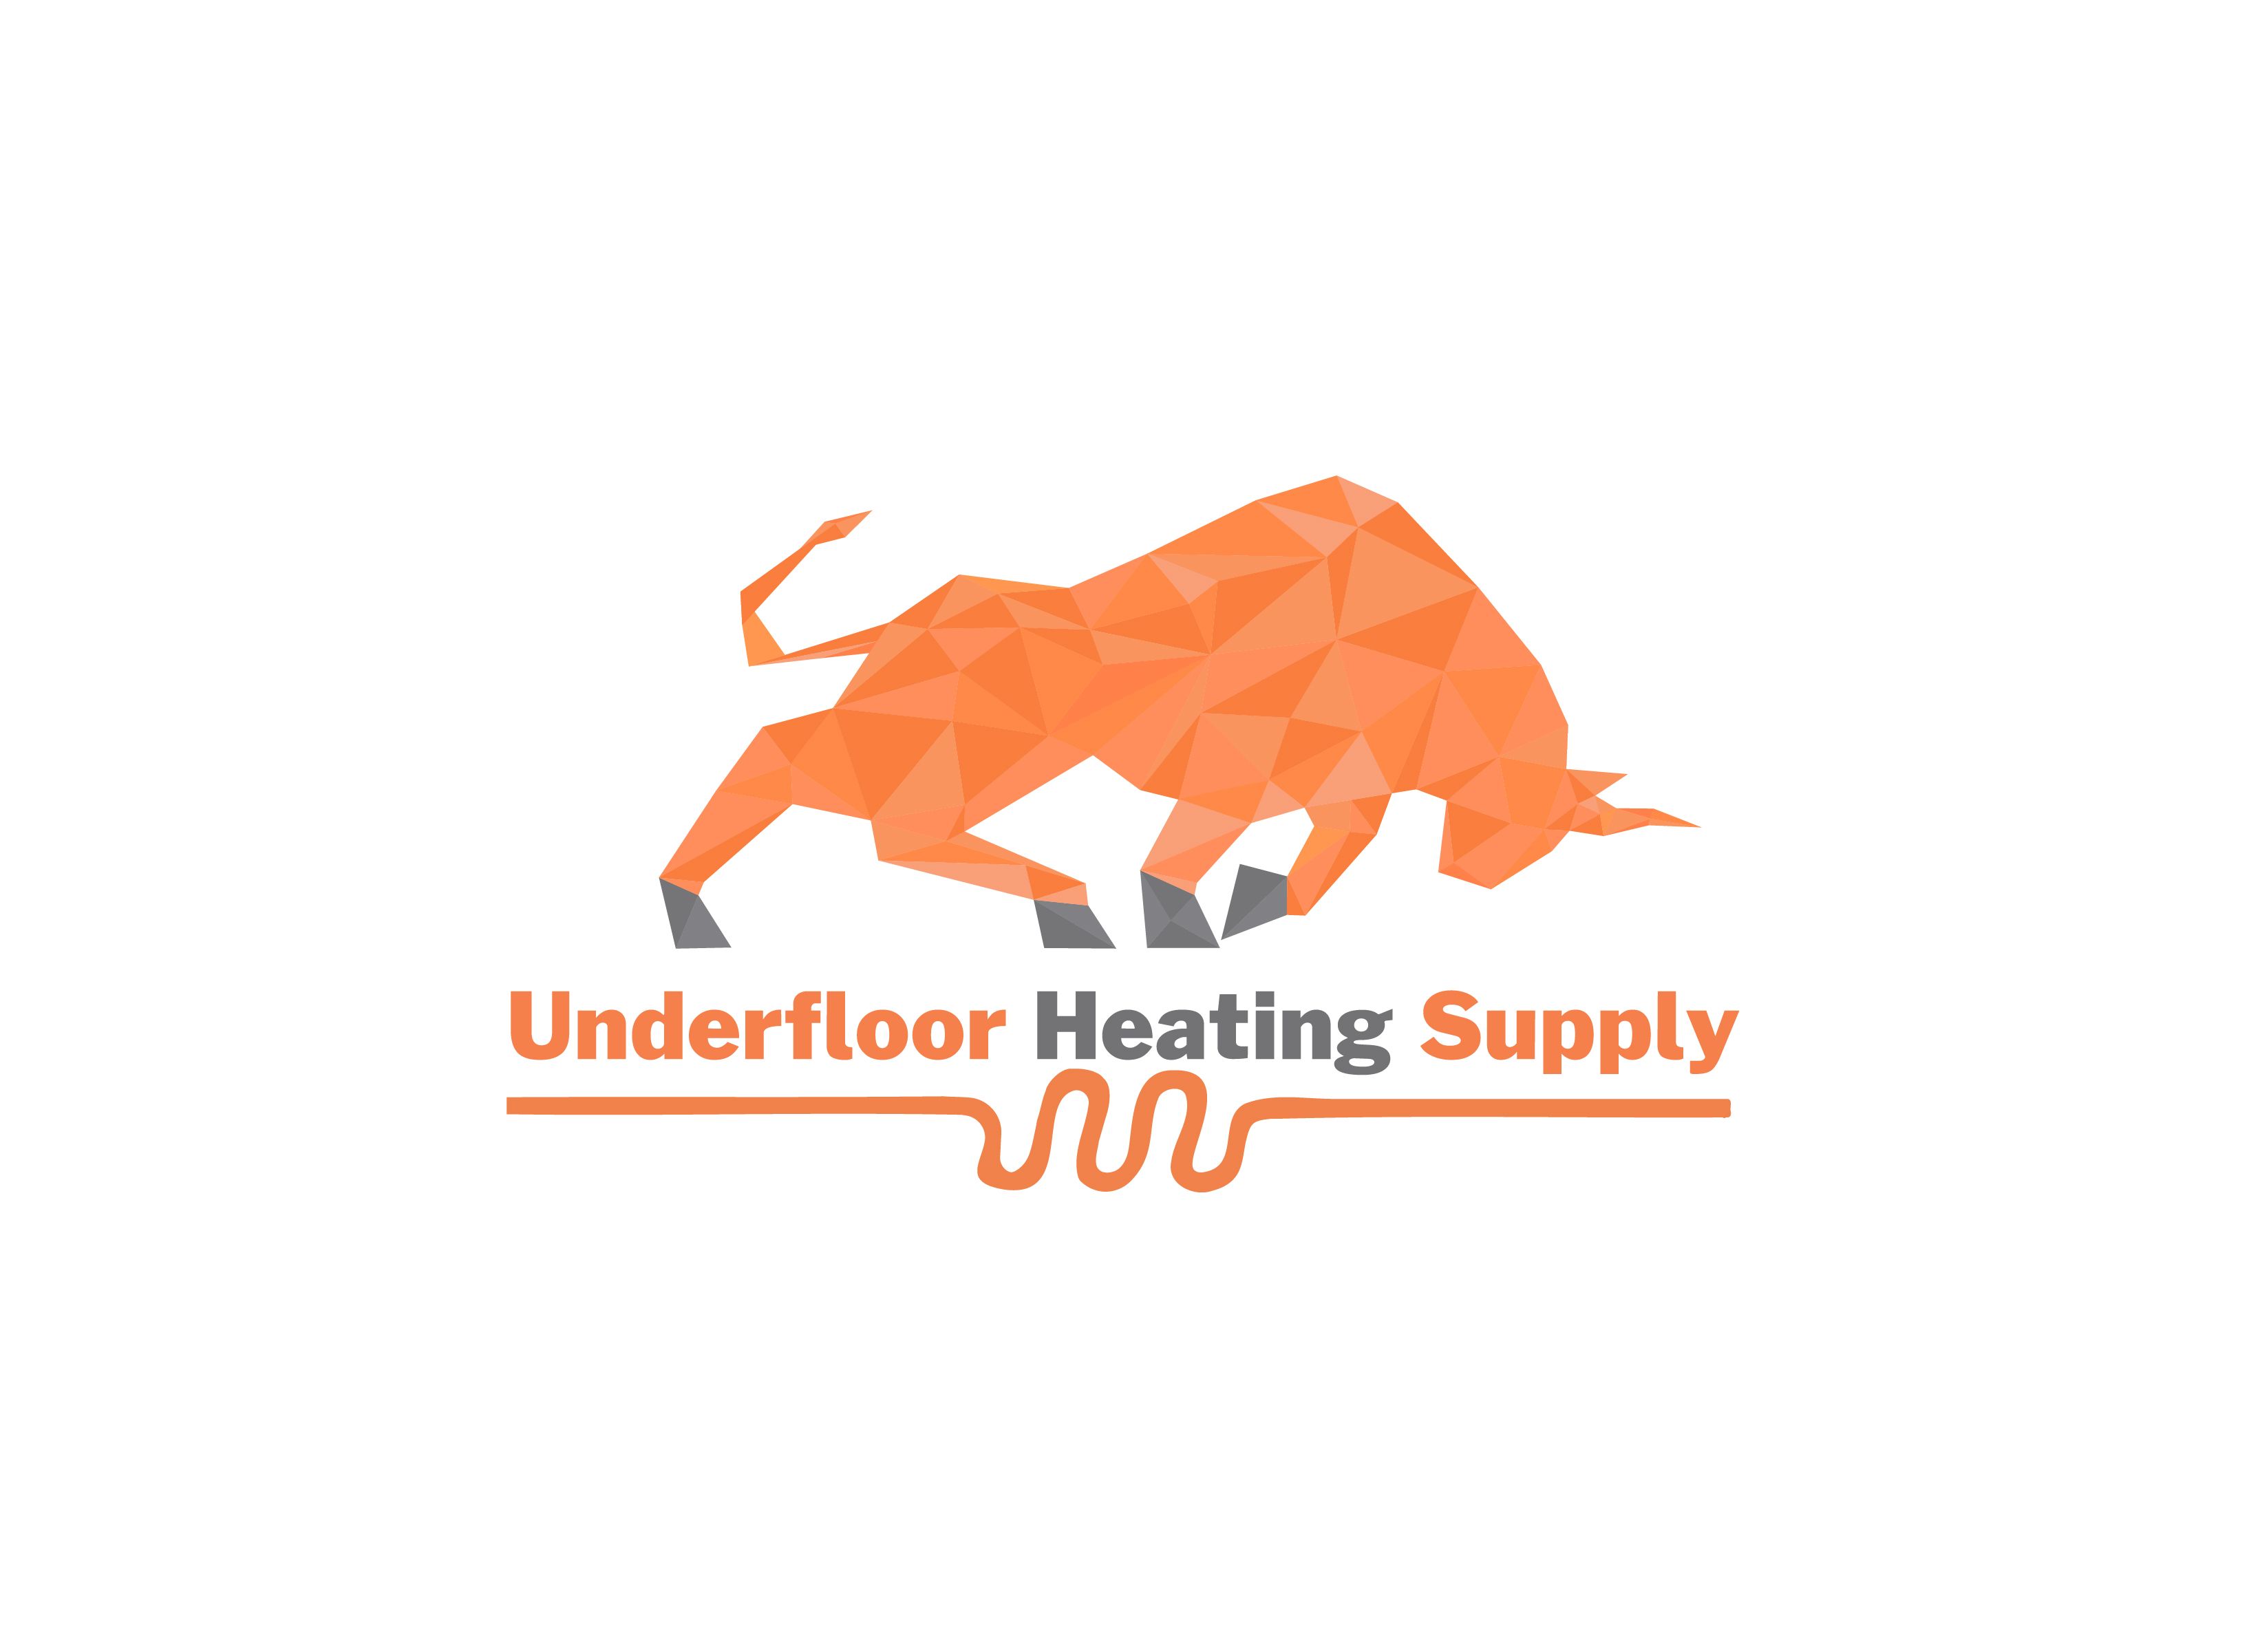 Underfloor Heating Supply Limited